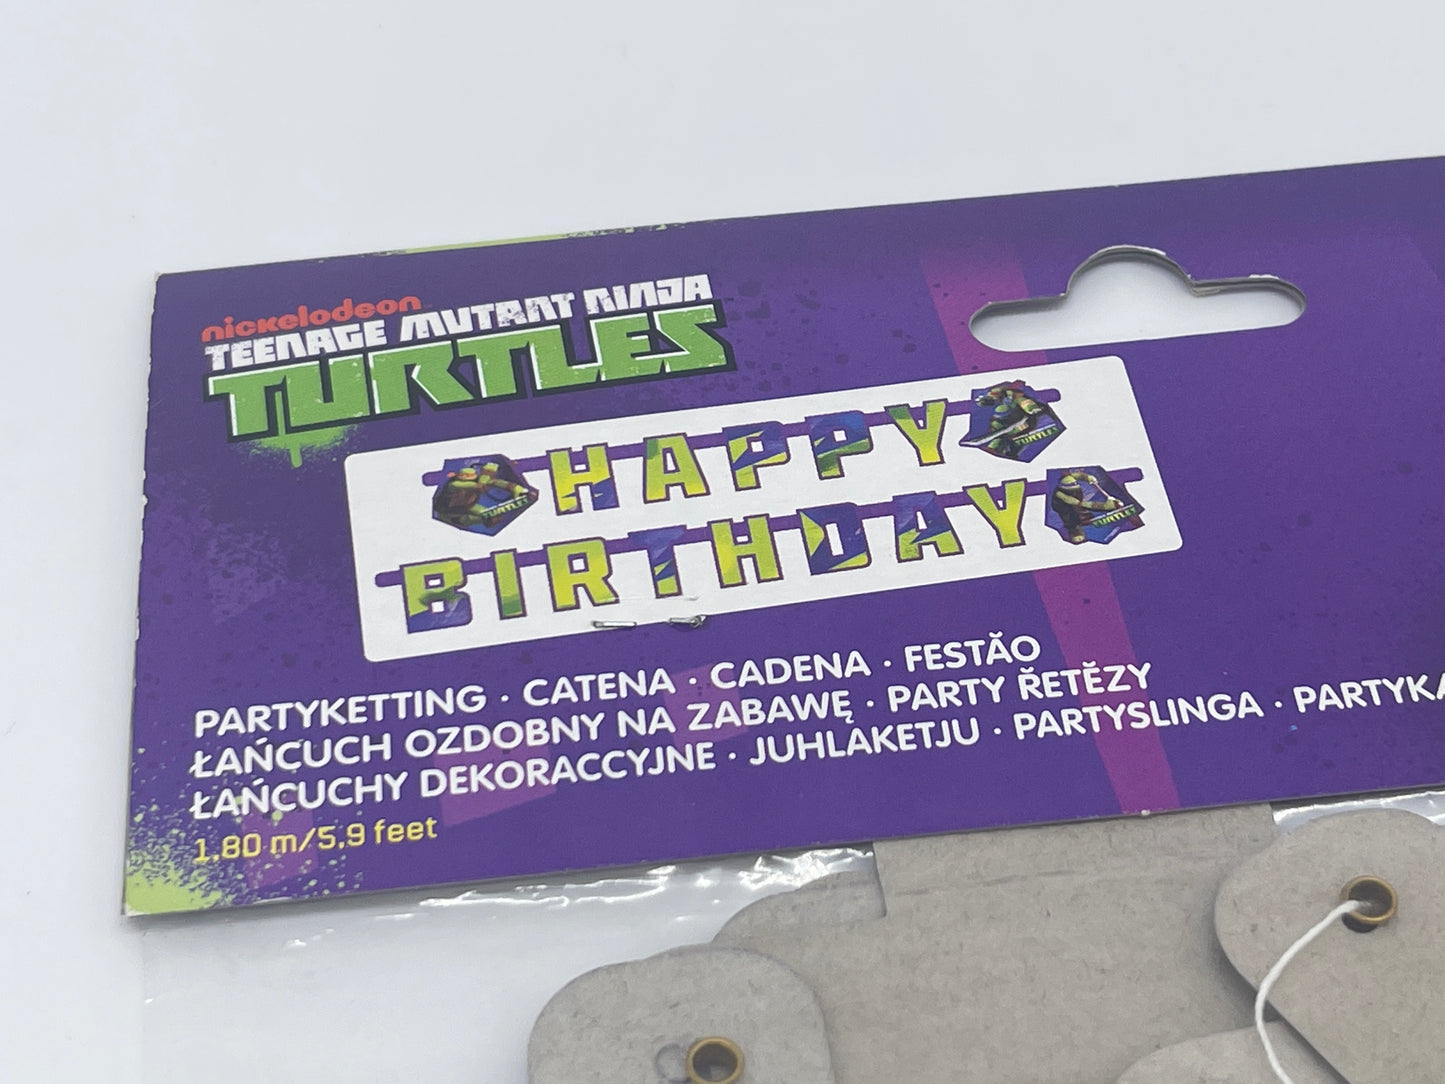 Teenage Mutant Ninja Turtles "Happy Birthday" Party Banner 1,80m Breite TMNT